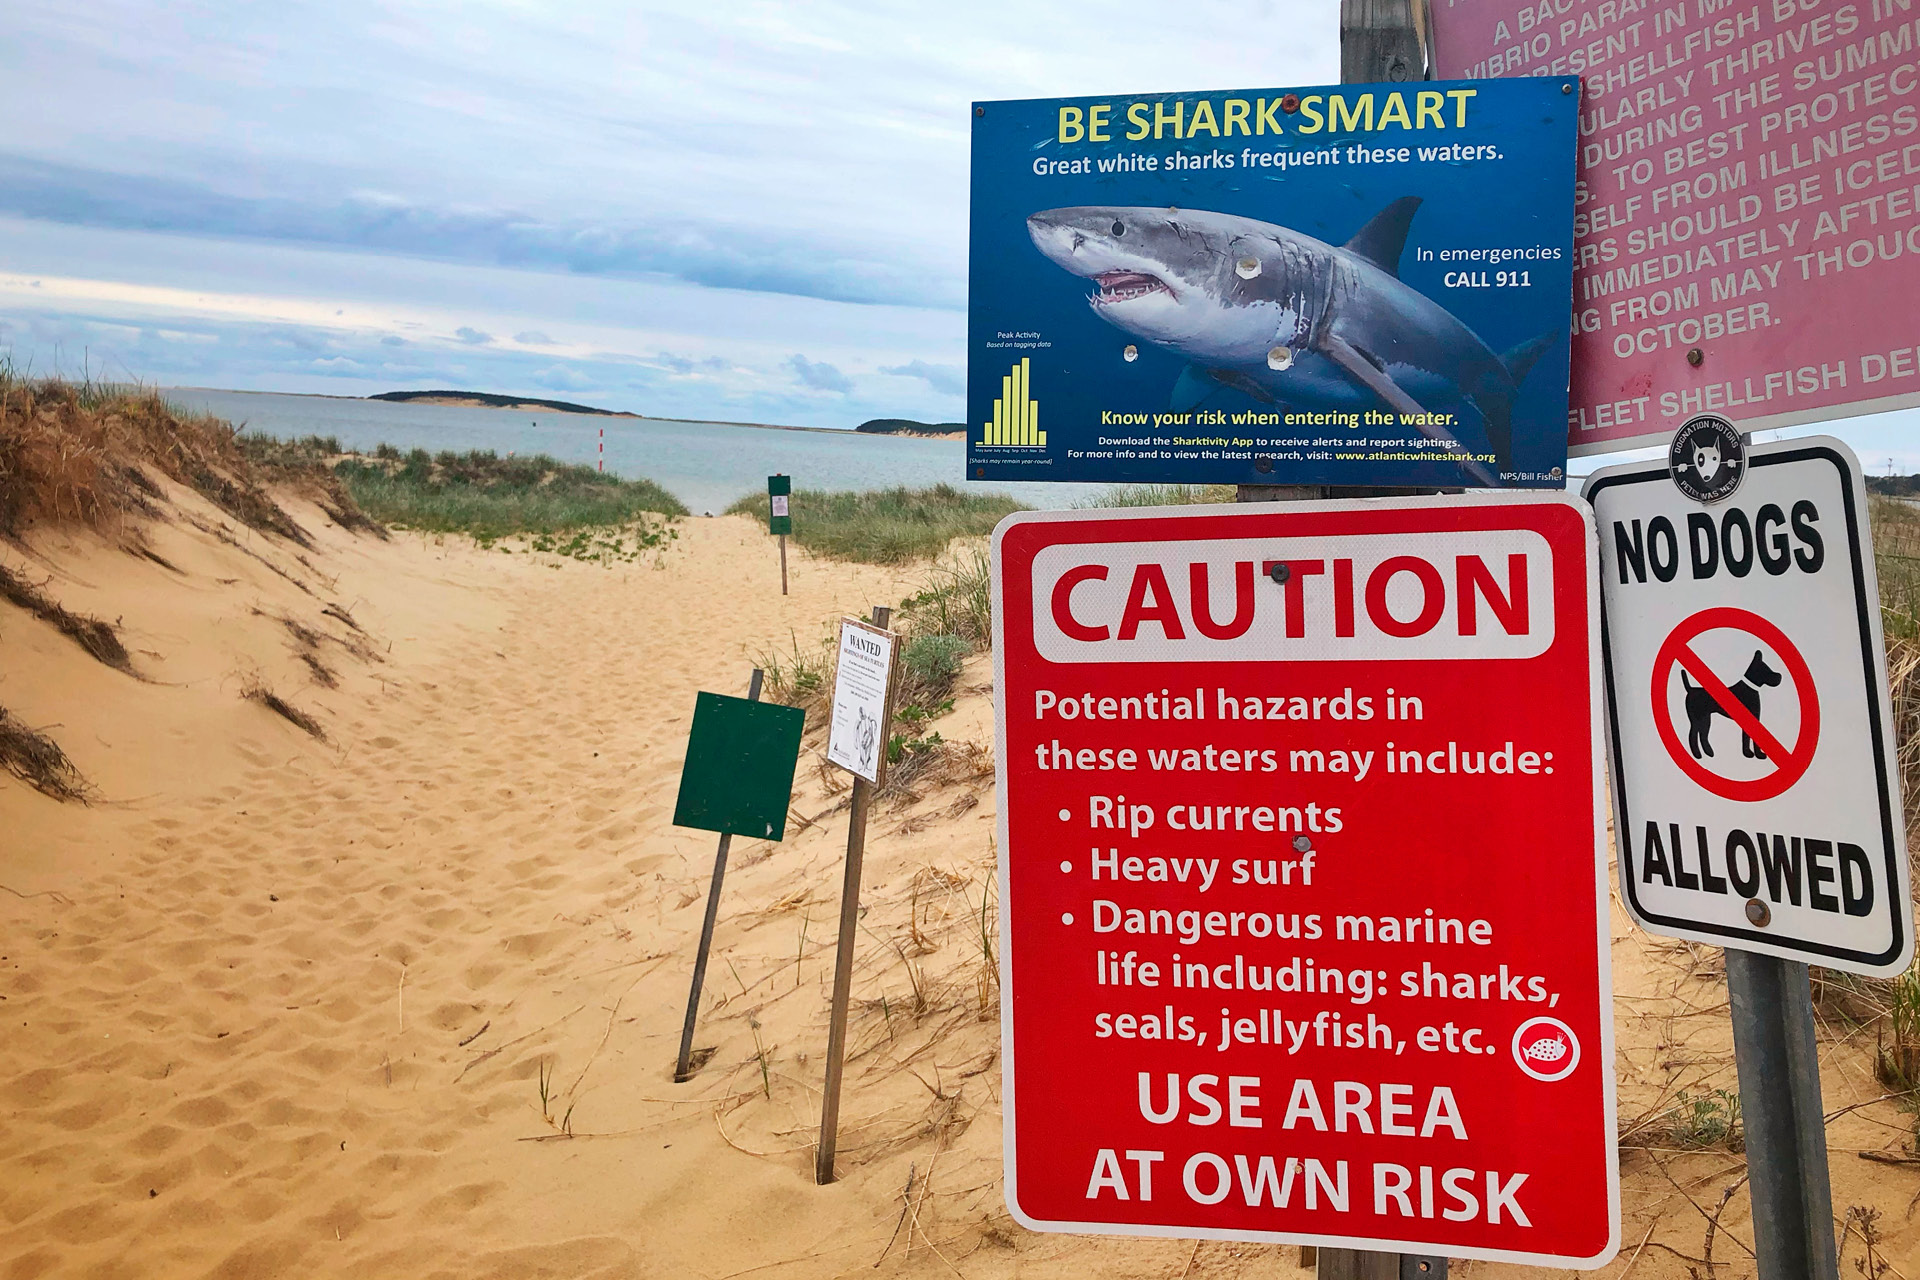 First Massachusetts beach closed of 2023 season due to shark